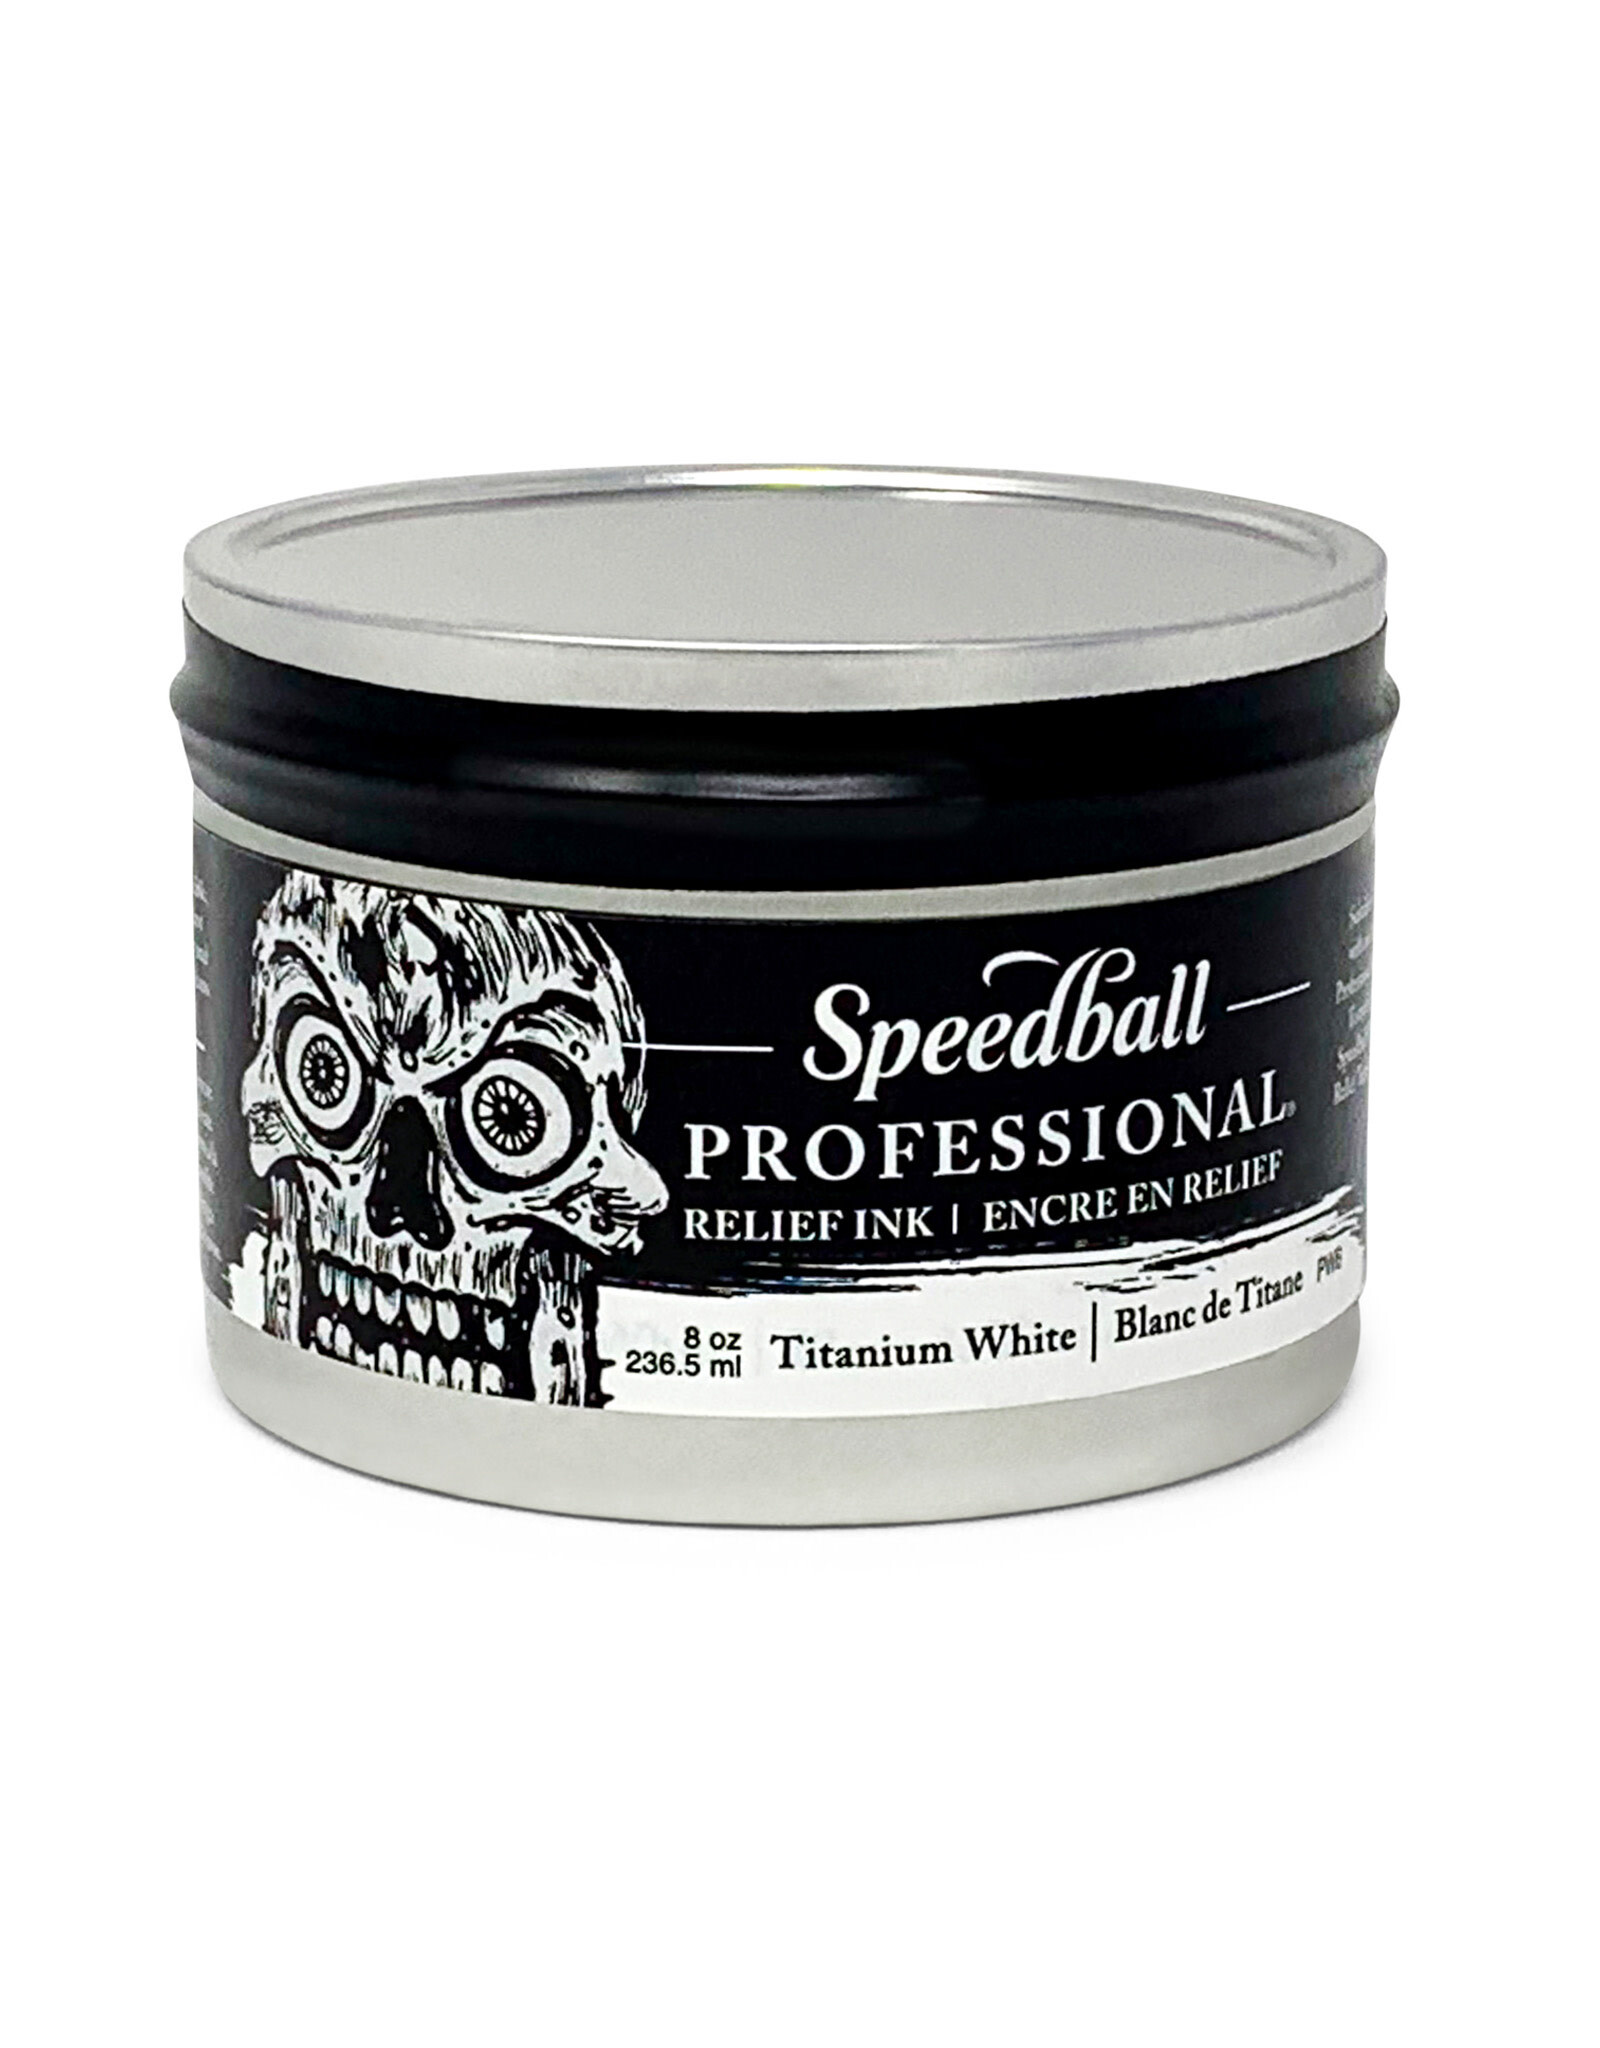 SPEEDBALL ART PRODUCTS Speedball Professional Relief Ink, Titanium White, 8oz